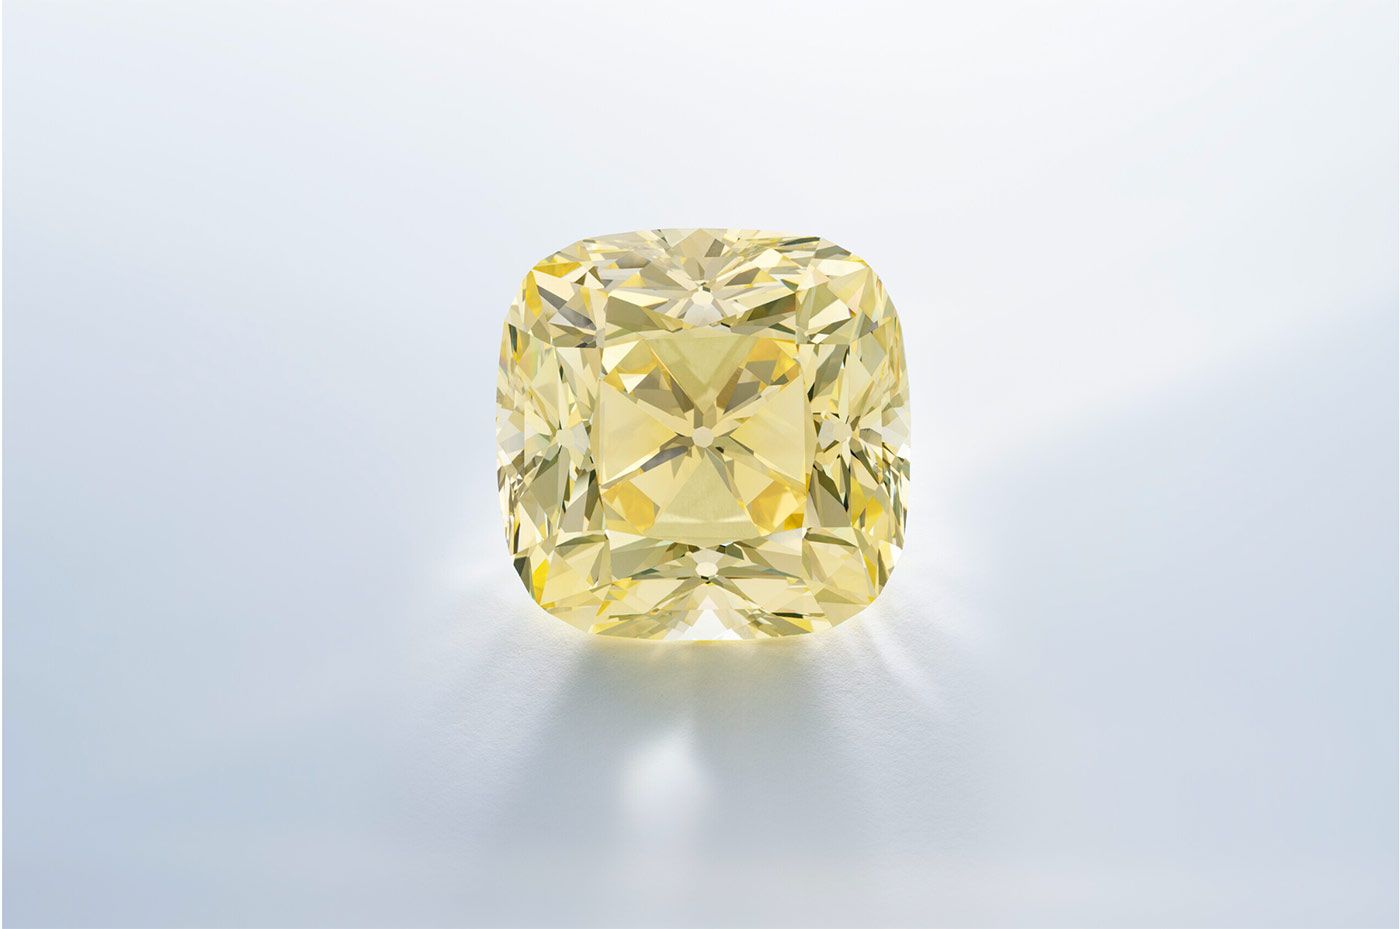 The Red Cross 205.07 carat fancy intense yellow cushion-cut diamond